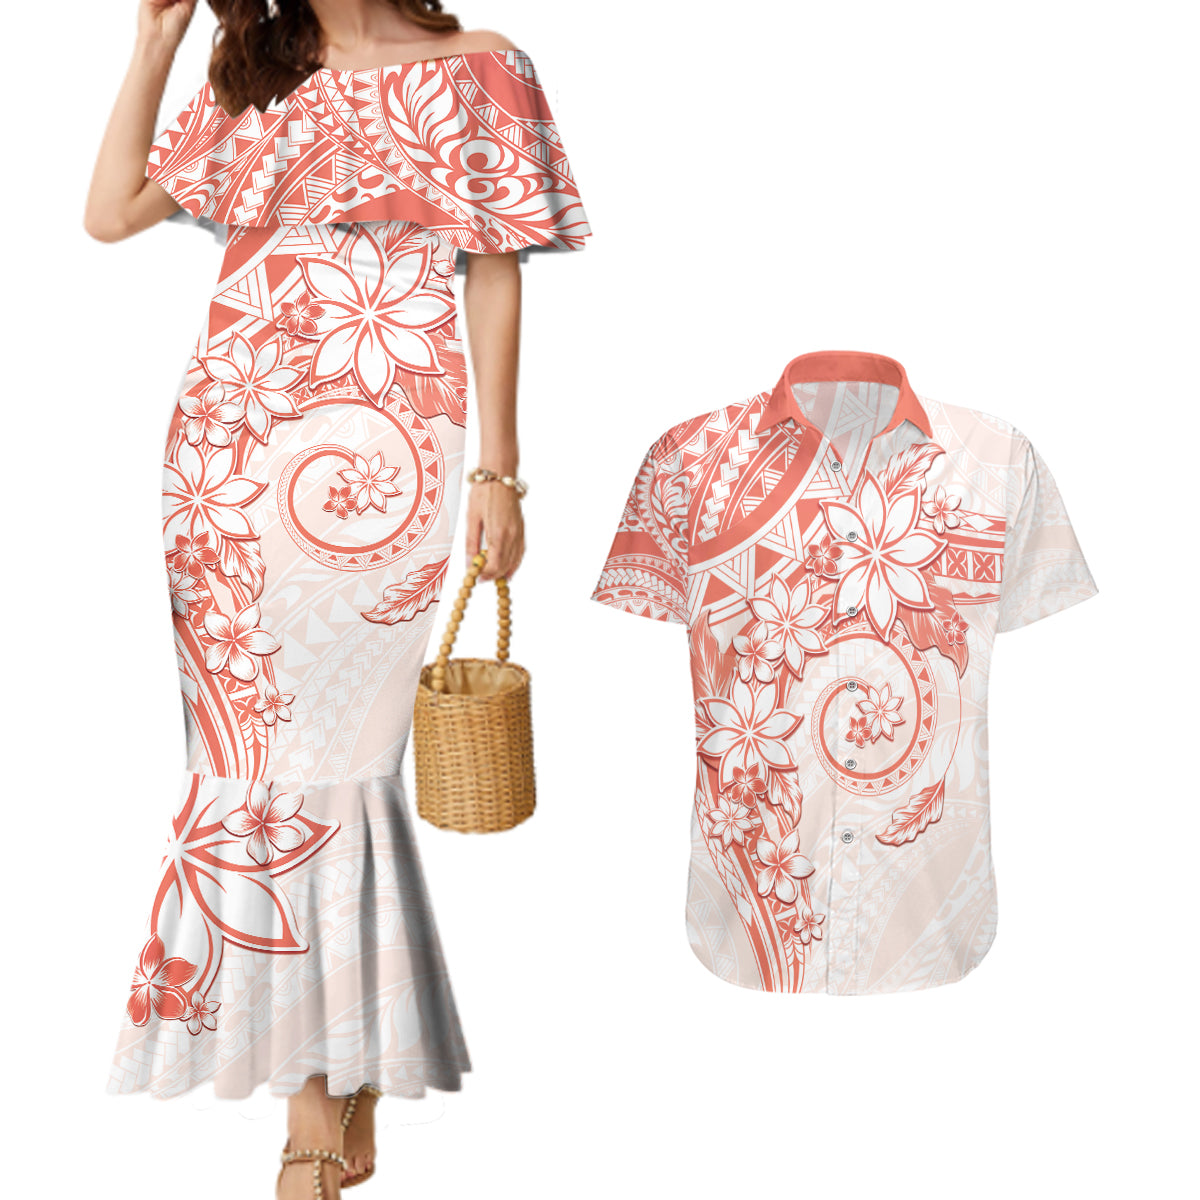 Polynesian Pattern With Plumeria Flowers Couples Matching Mermaid Dress and Hawaiian Shirt Orange Peach